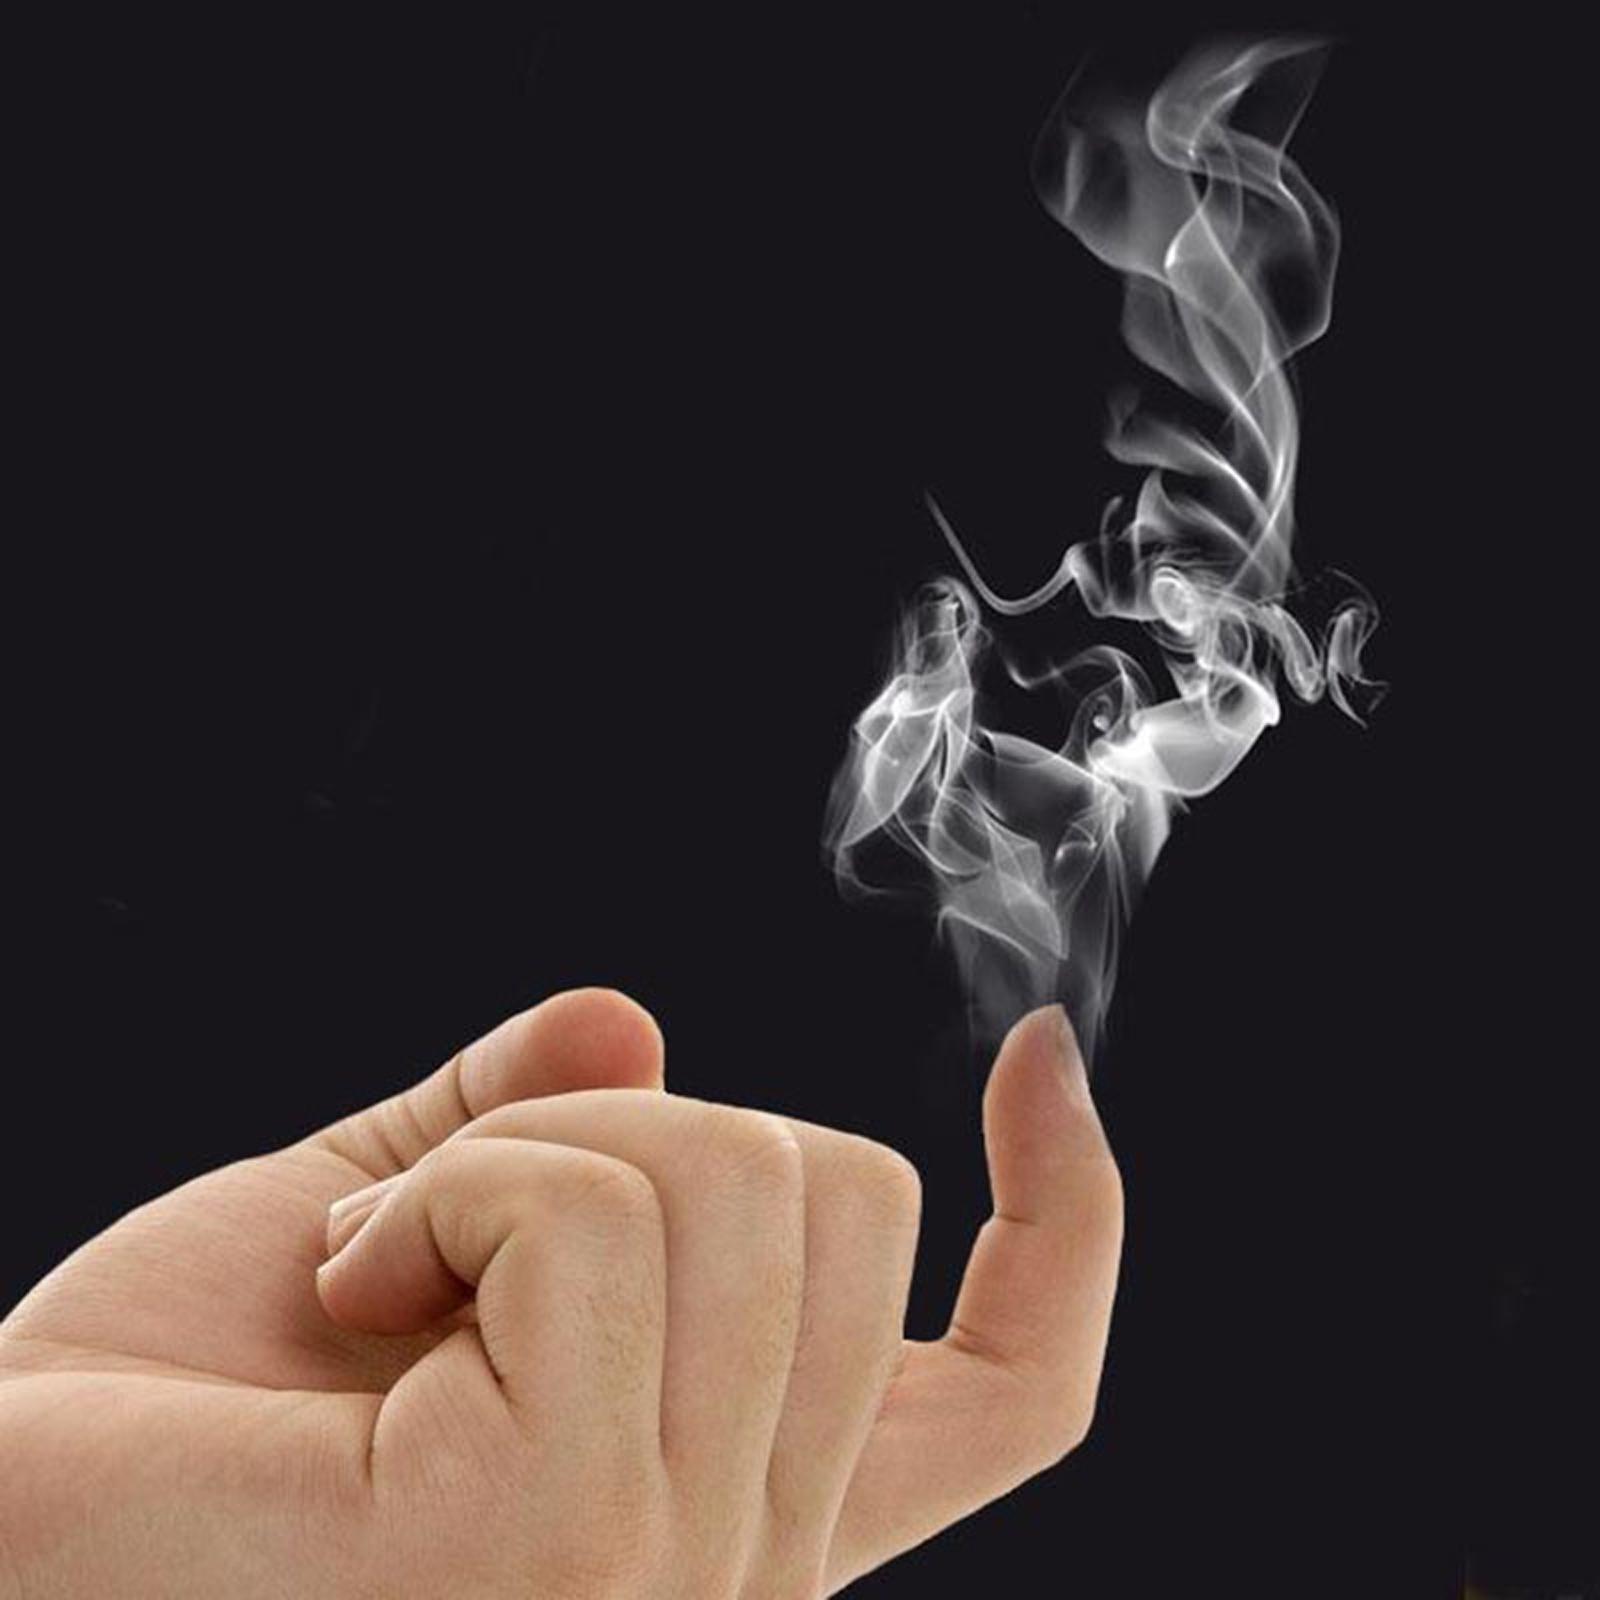 Magic Smoke from Finger Tips Surprise Prank Joke Mystical 1J9L Fun Trick G4R1